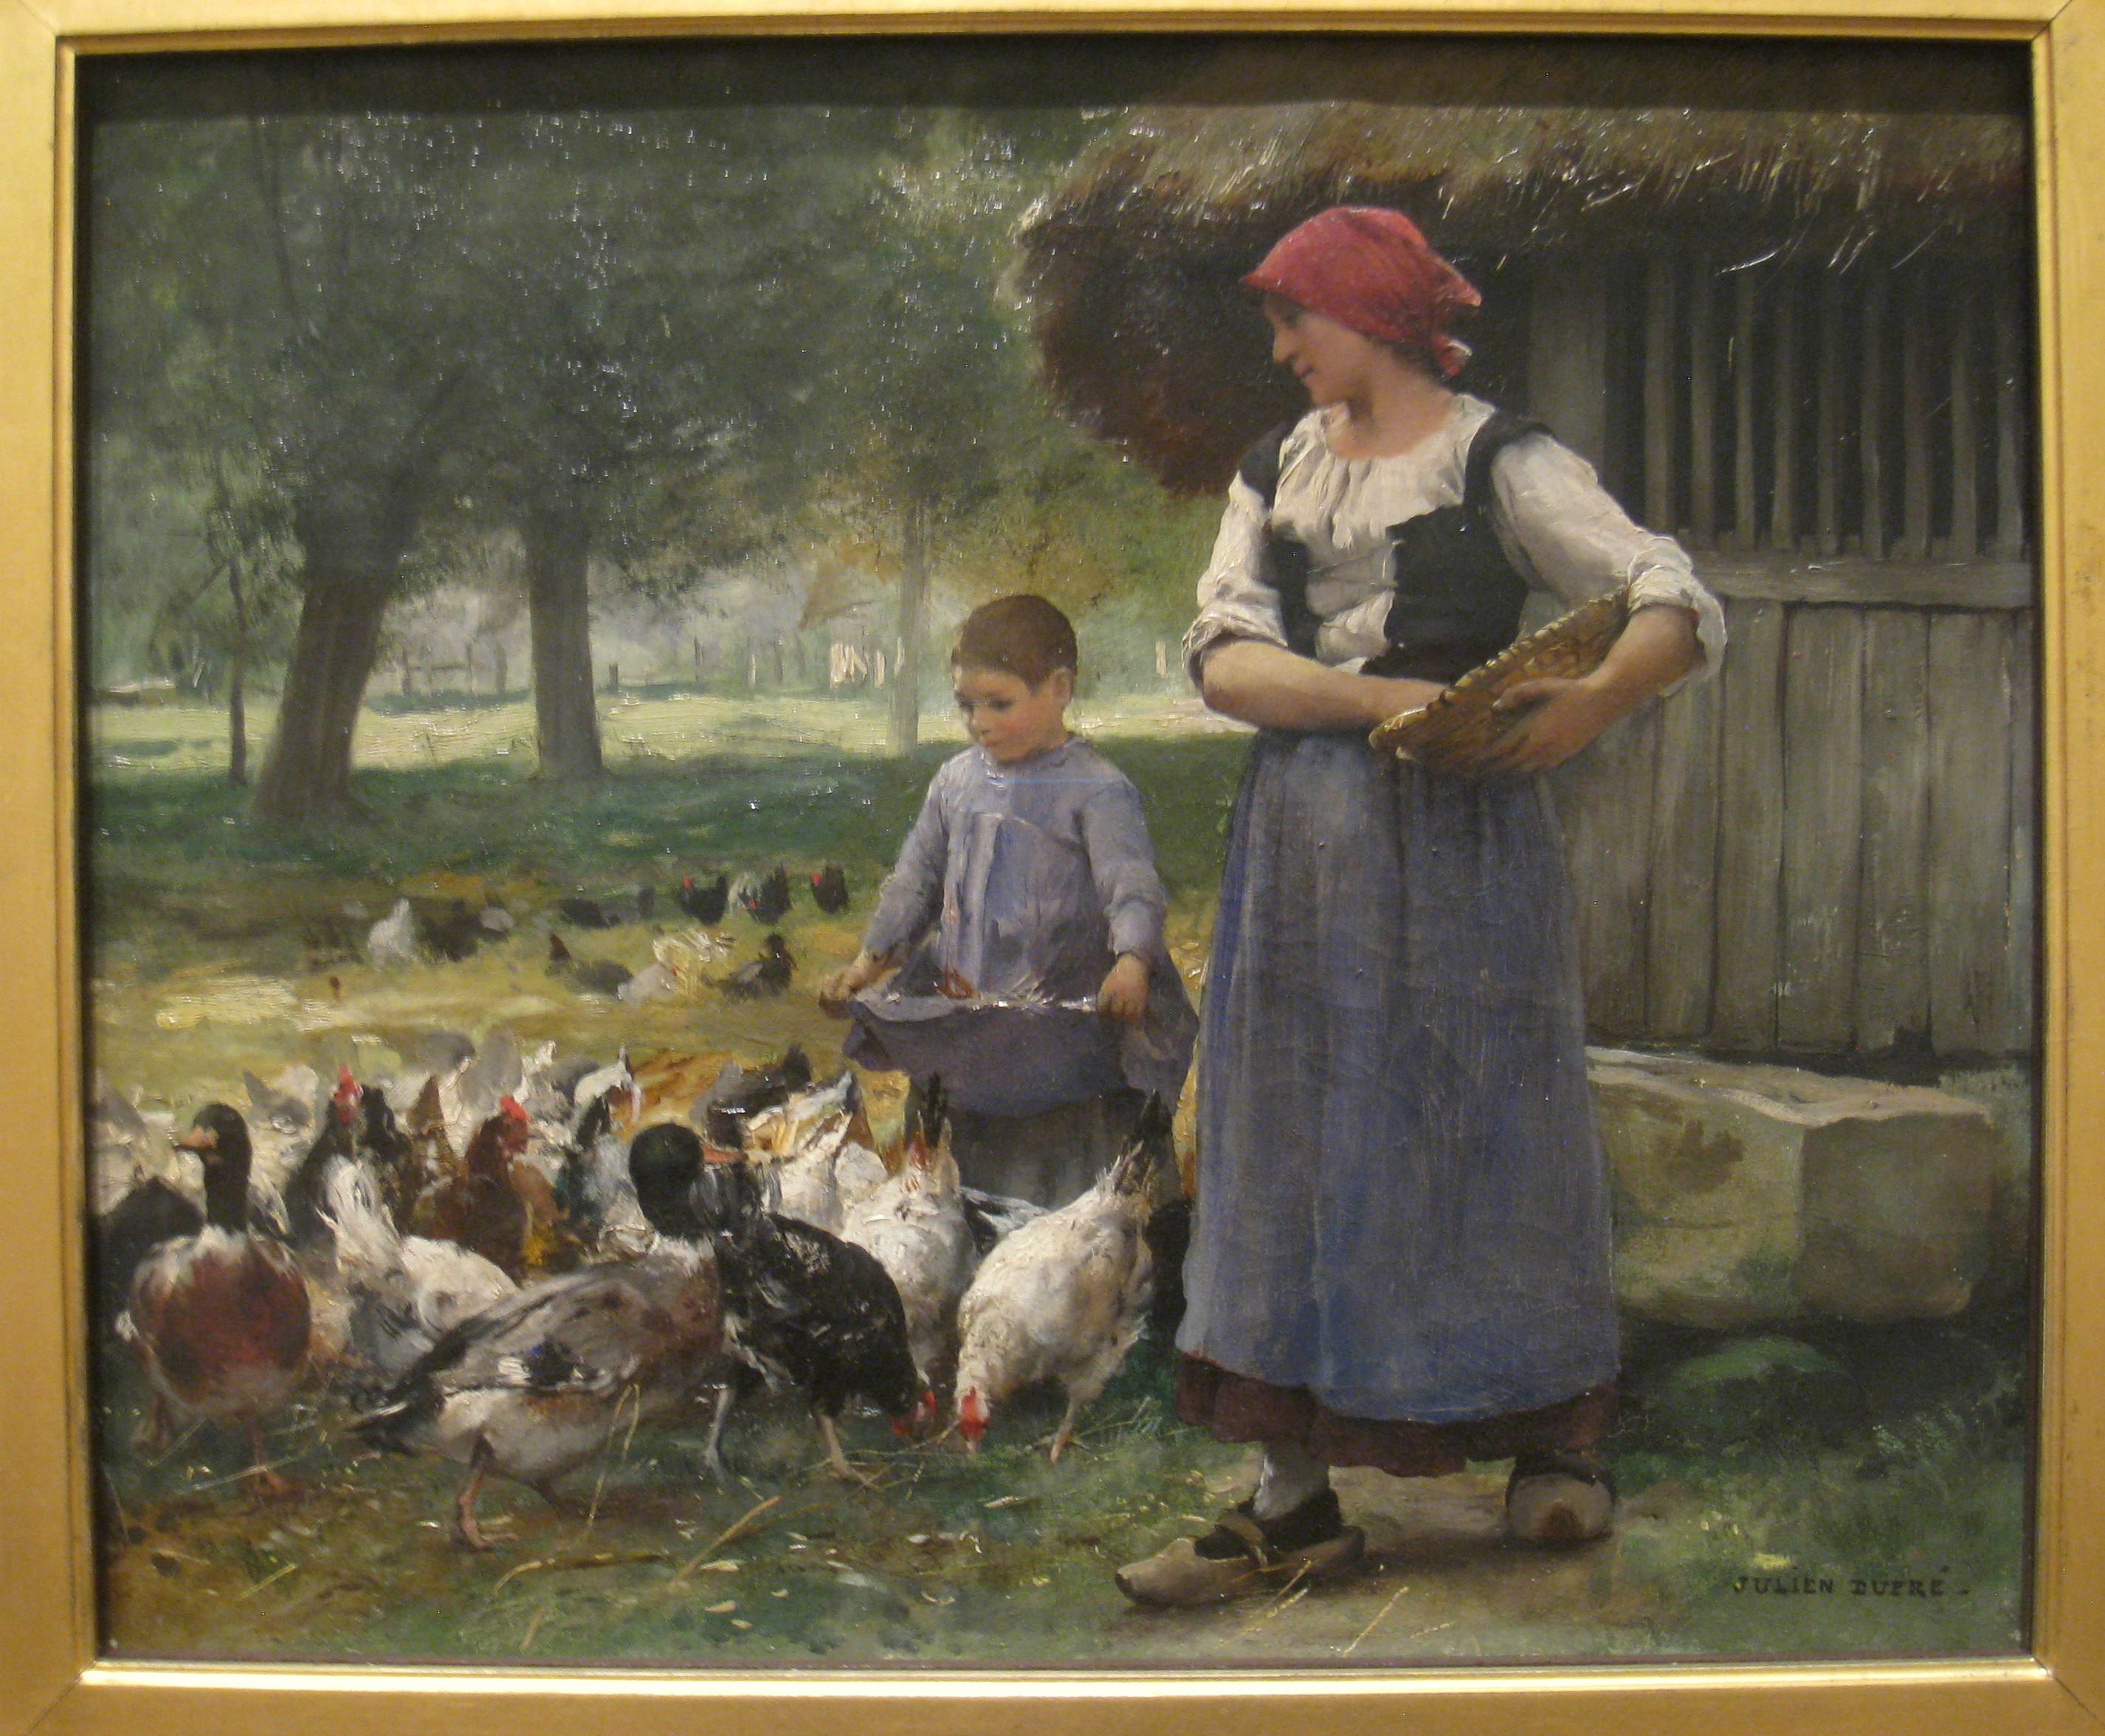 1013_Julien Dupre_Farm Girl Feeding Chickens 썸네일